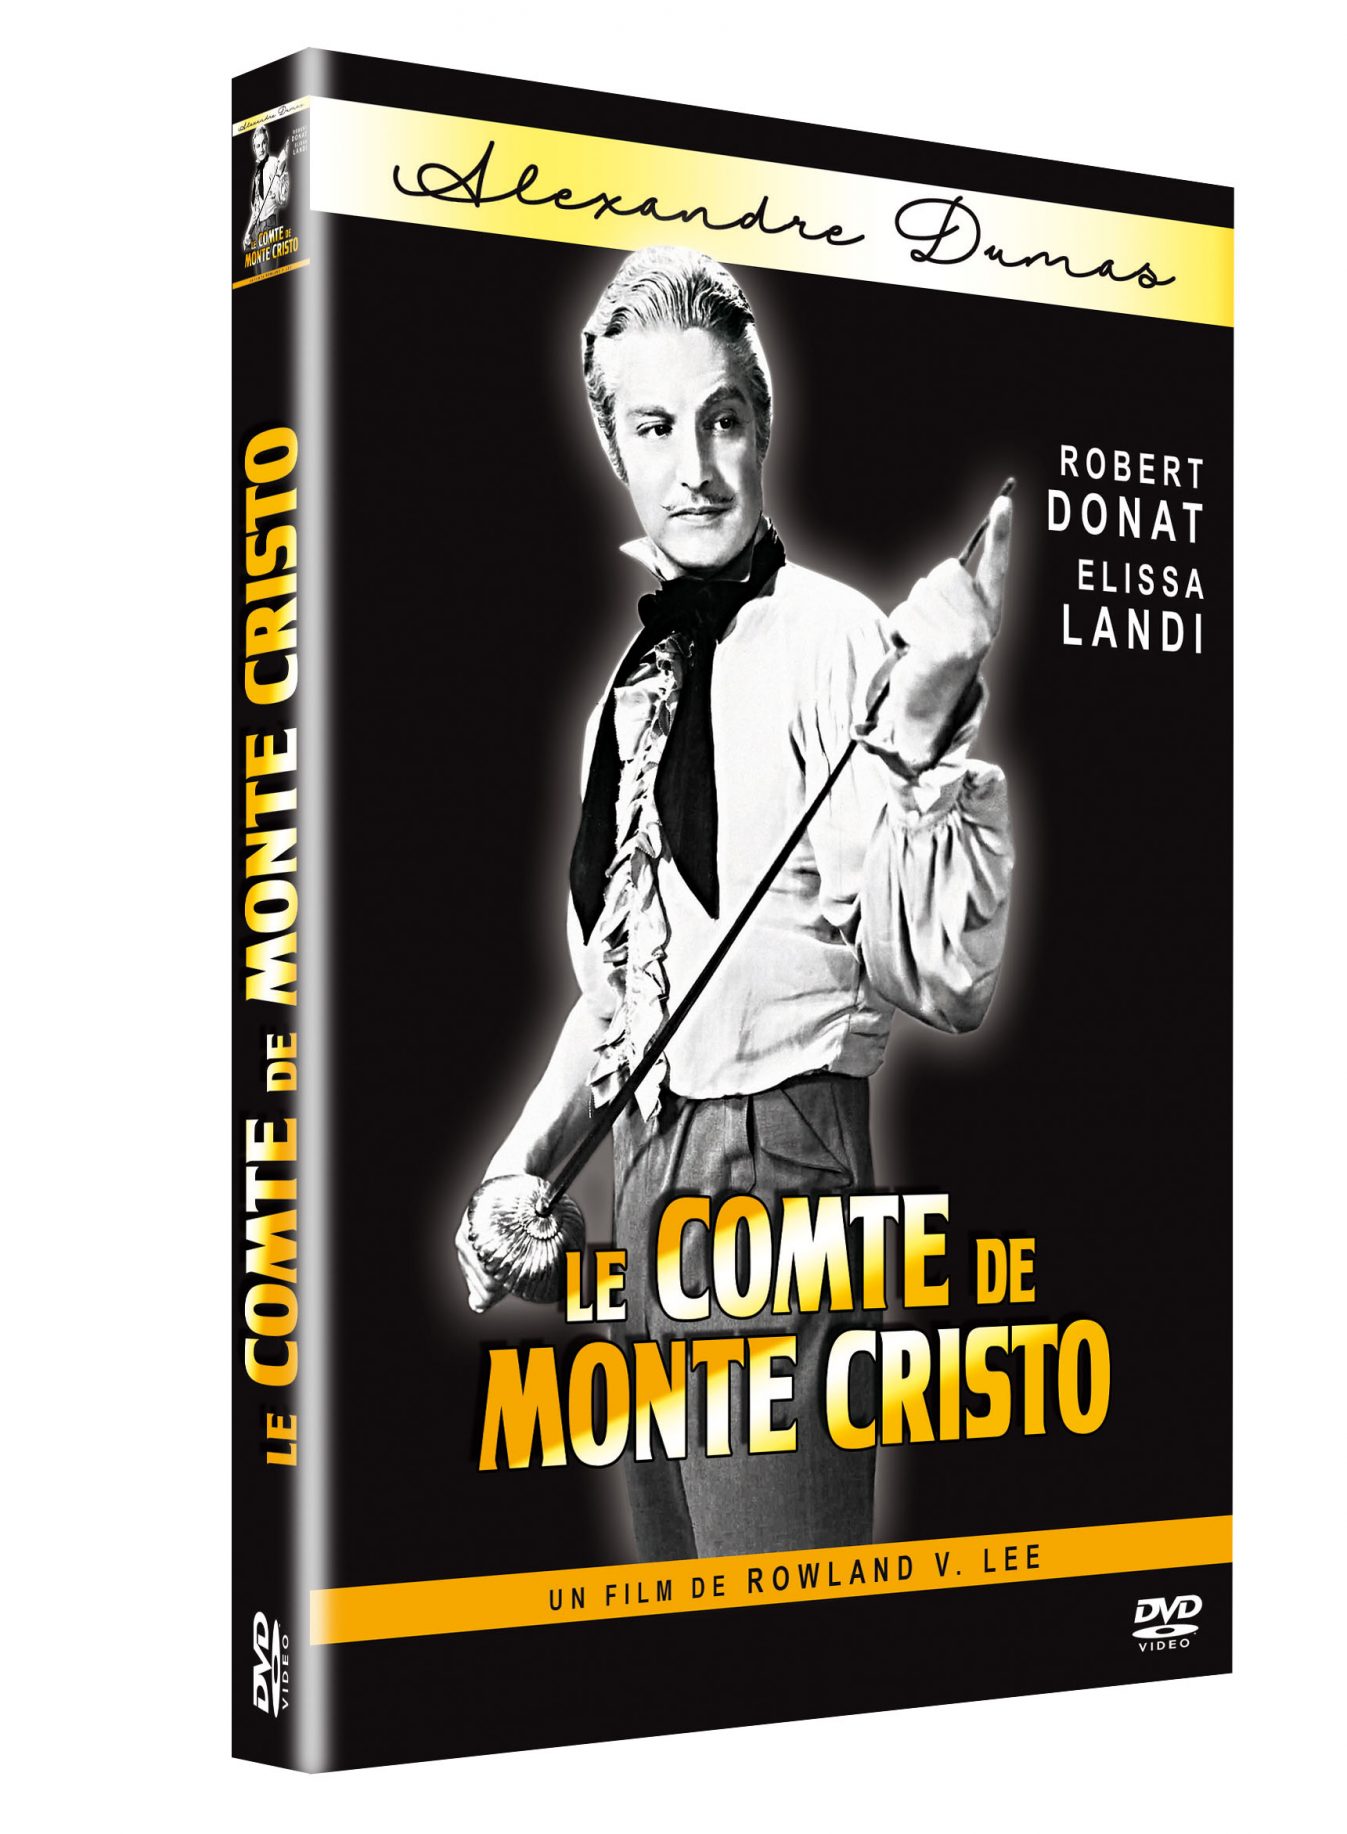 Le Comte de Monte Cristo en DVD le 02 Mai chez Rimini Editions